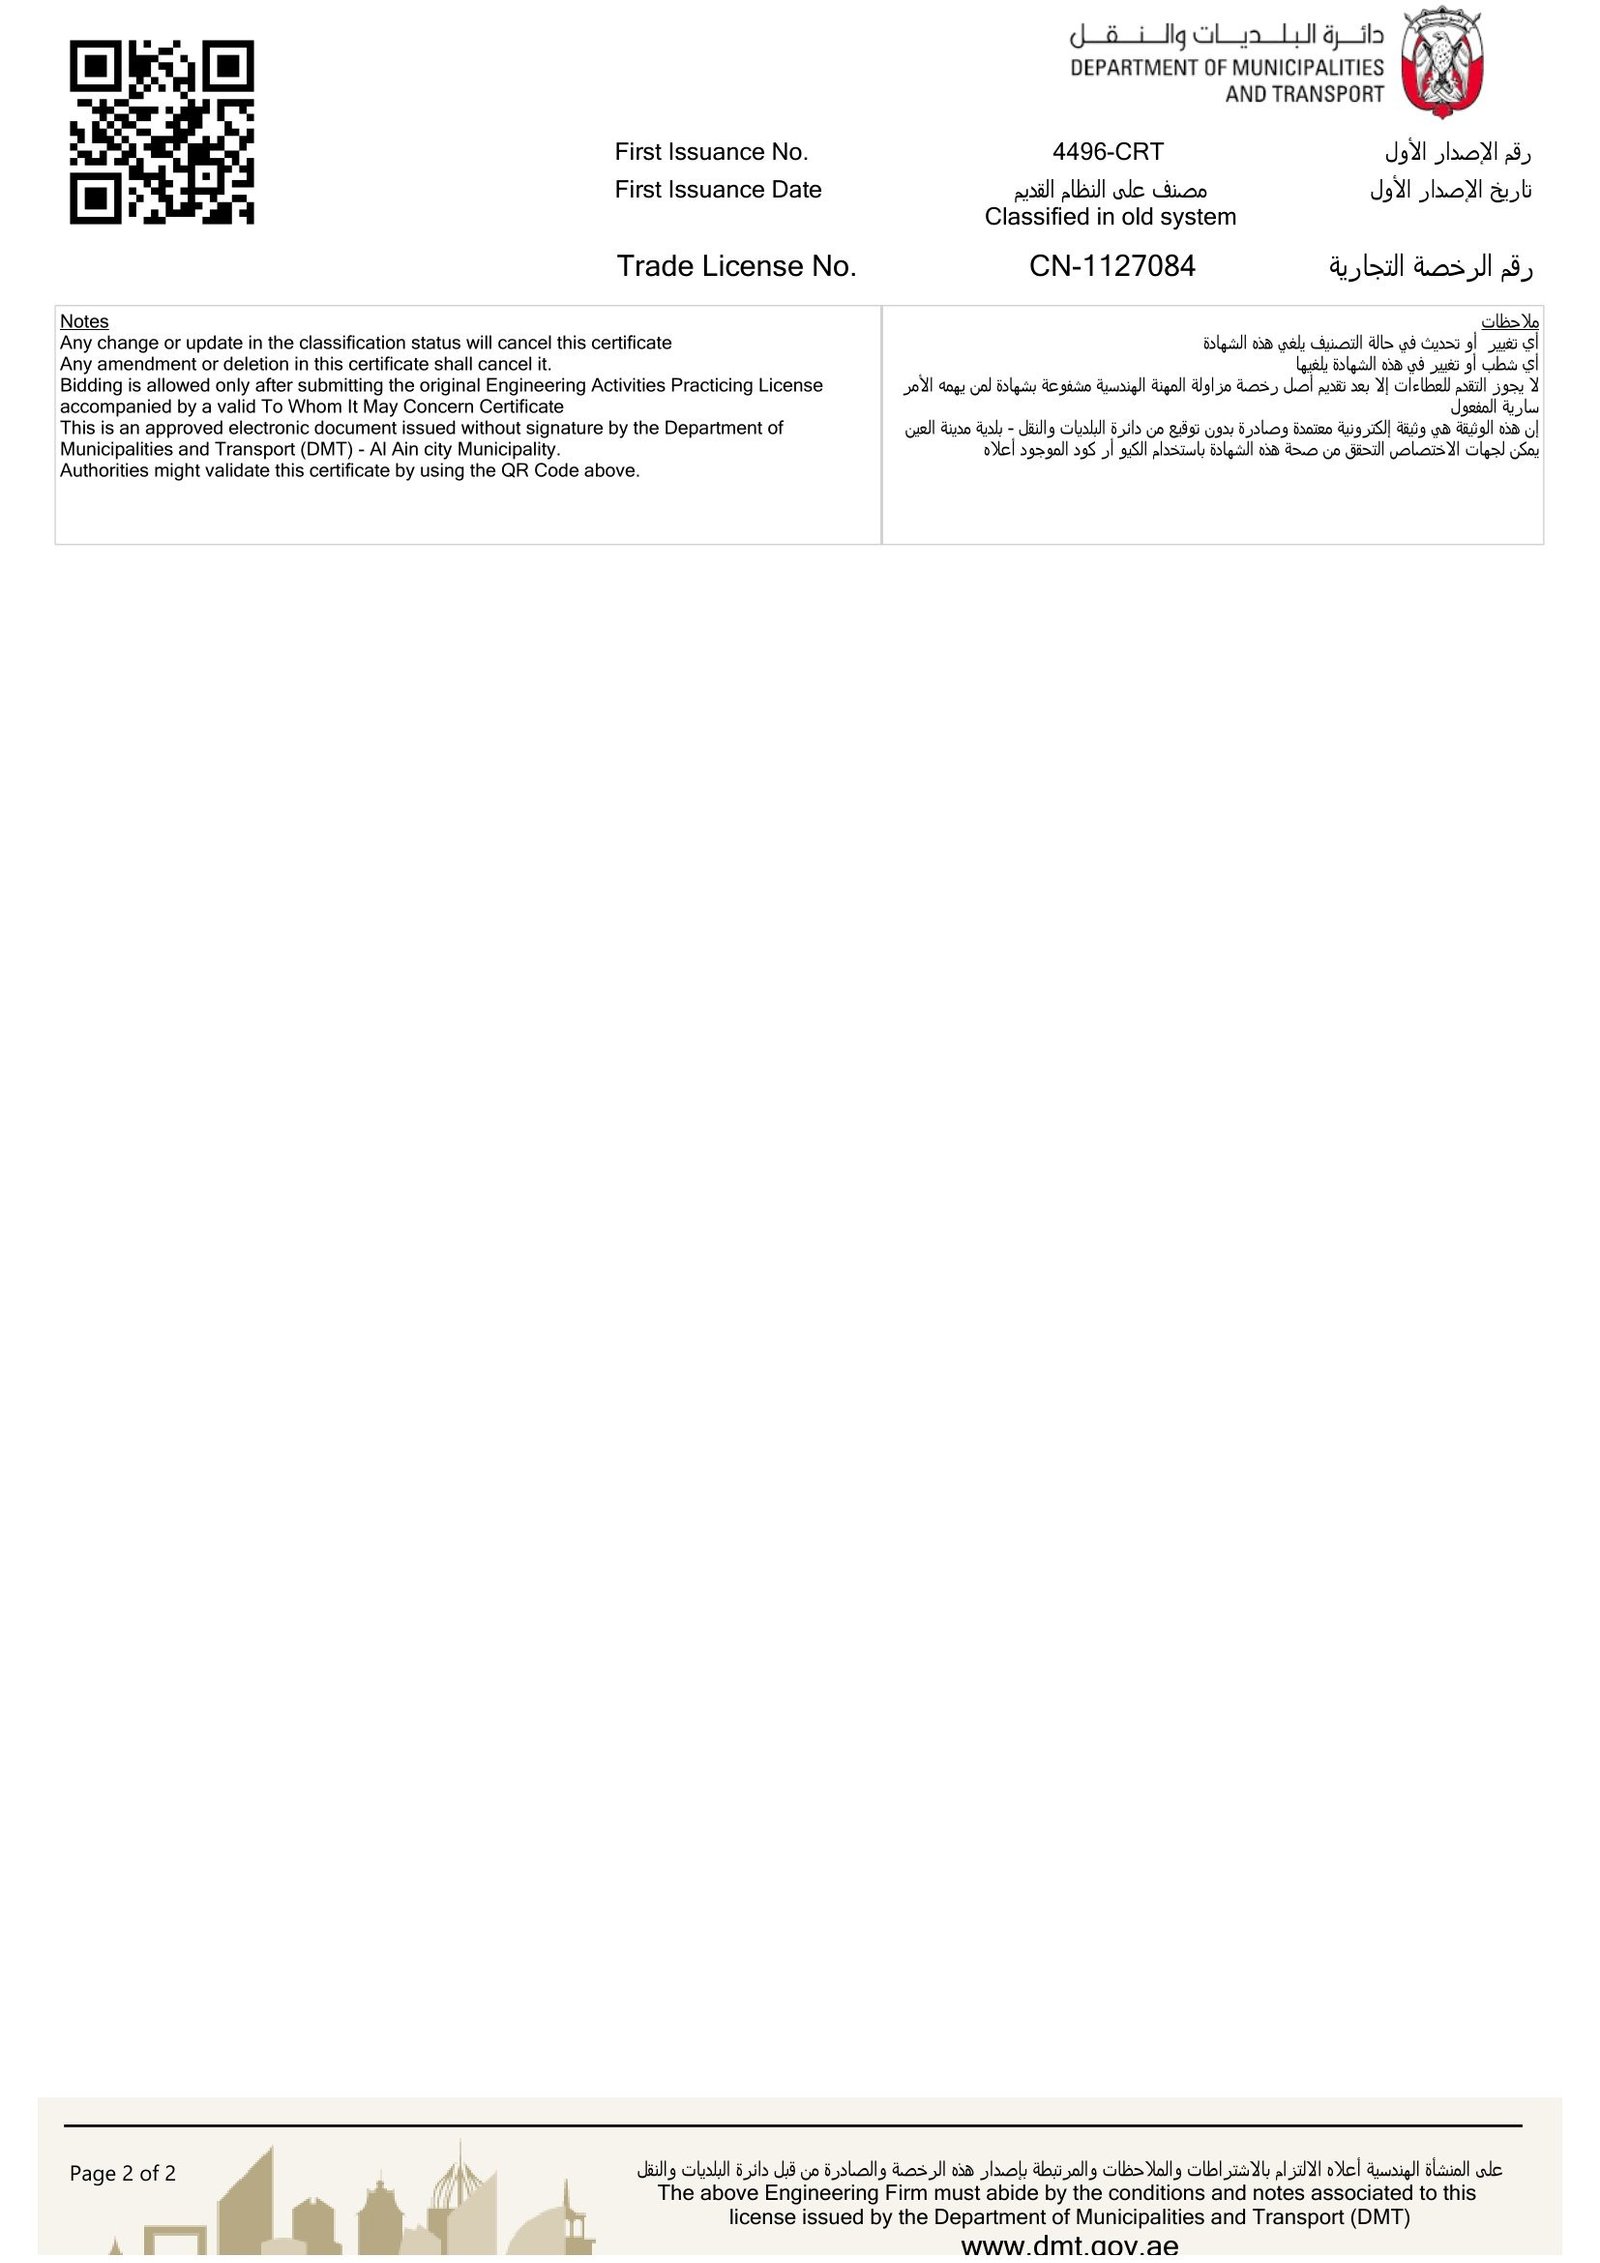 Practice License Certificate-CN-1127084 (12)-2